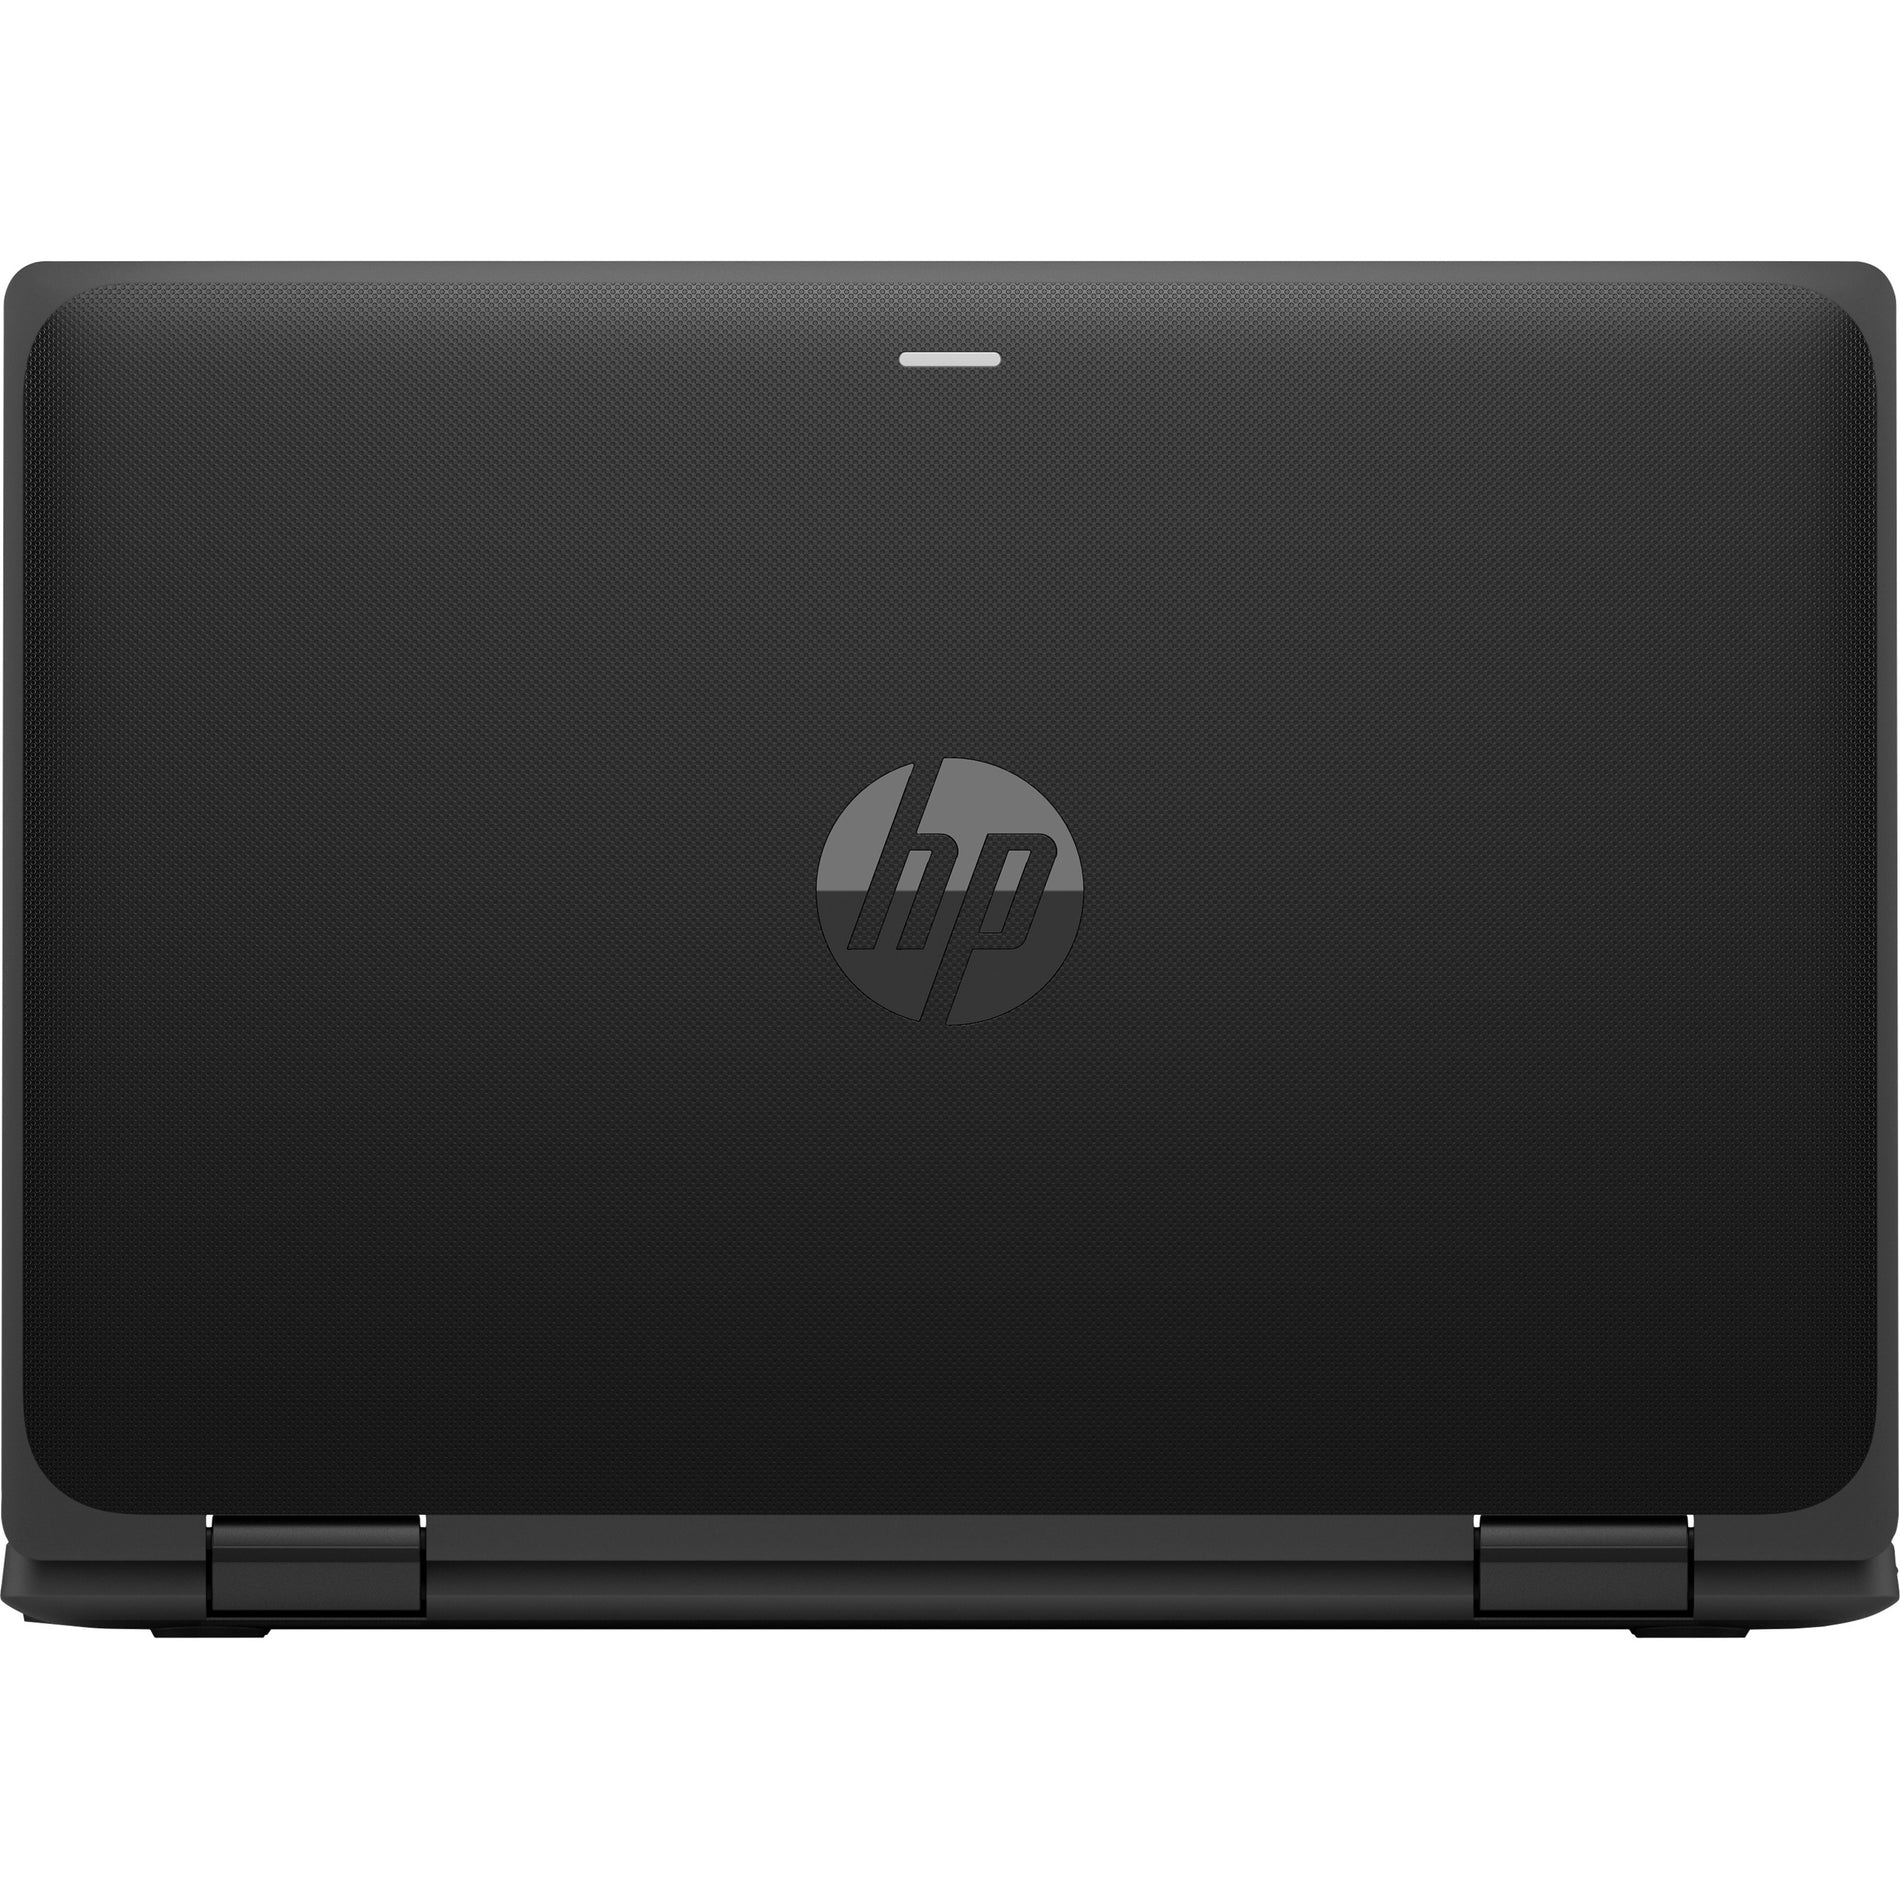 HP ProBook x360 11 G7 EE 2 in 1 Notebook, 11.6" Touchscreen, Intel Celeron N5100, 4GB RAM, 64GB Flash Memory